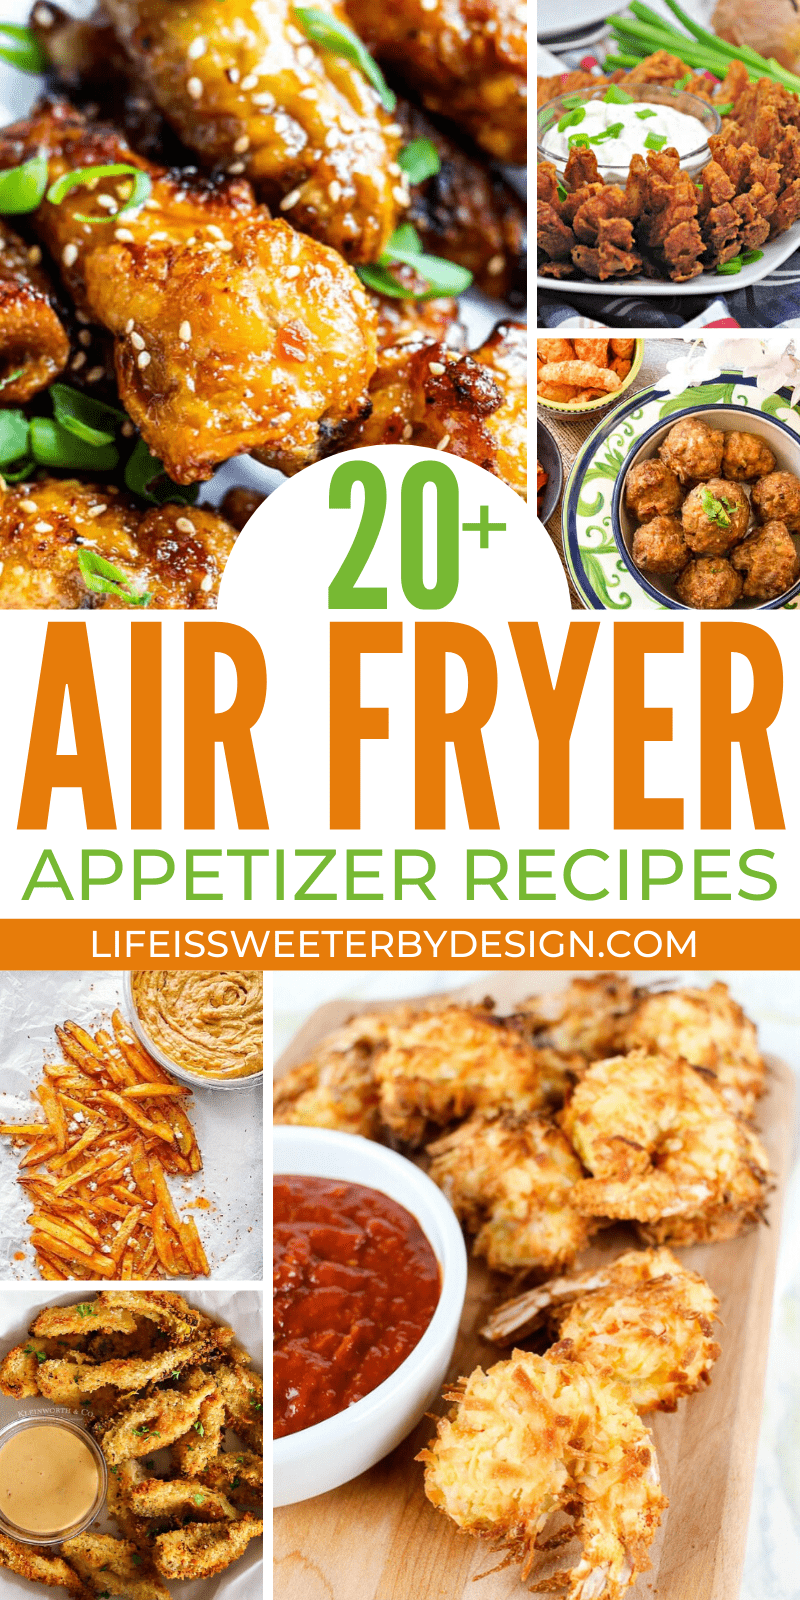 Air Fryer Appetizers